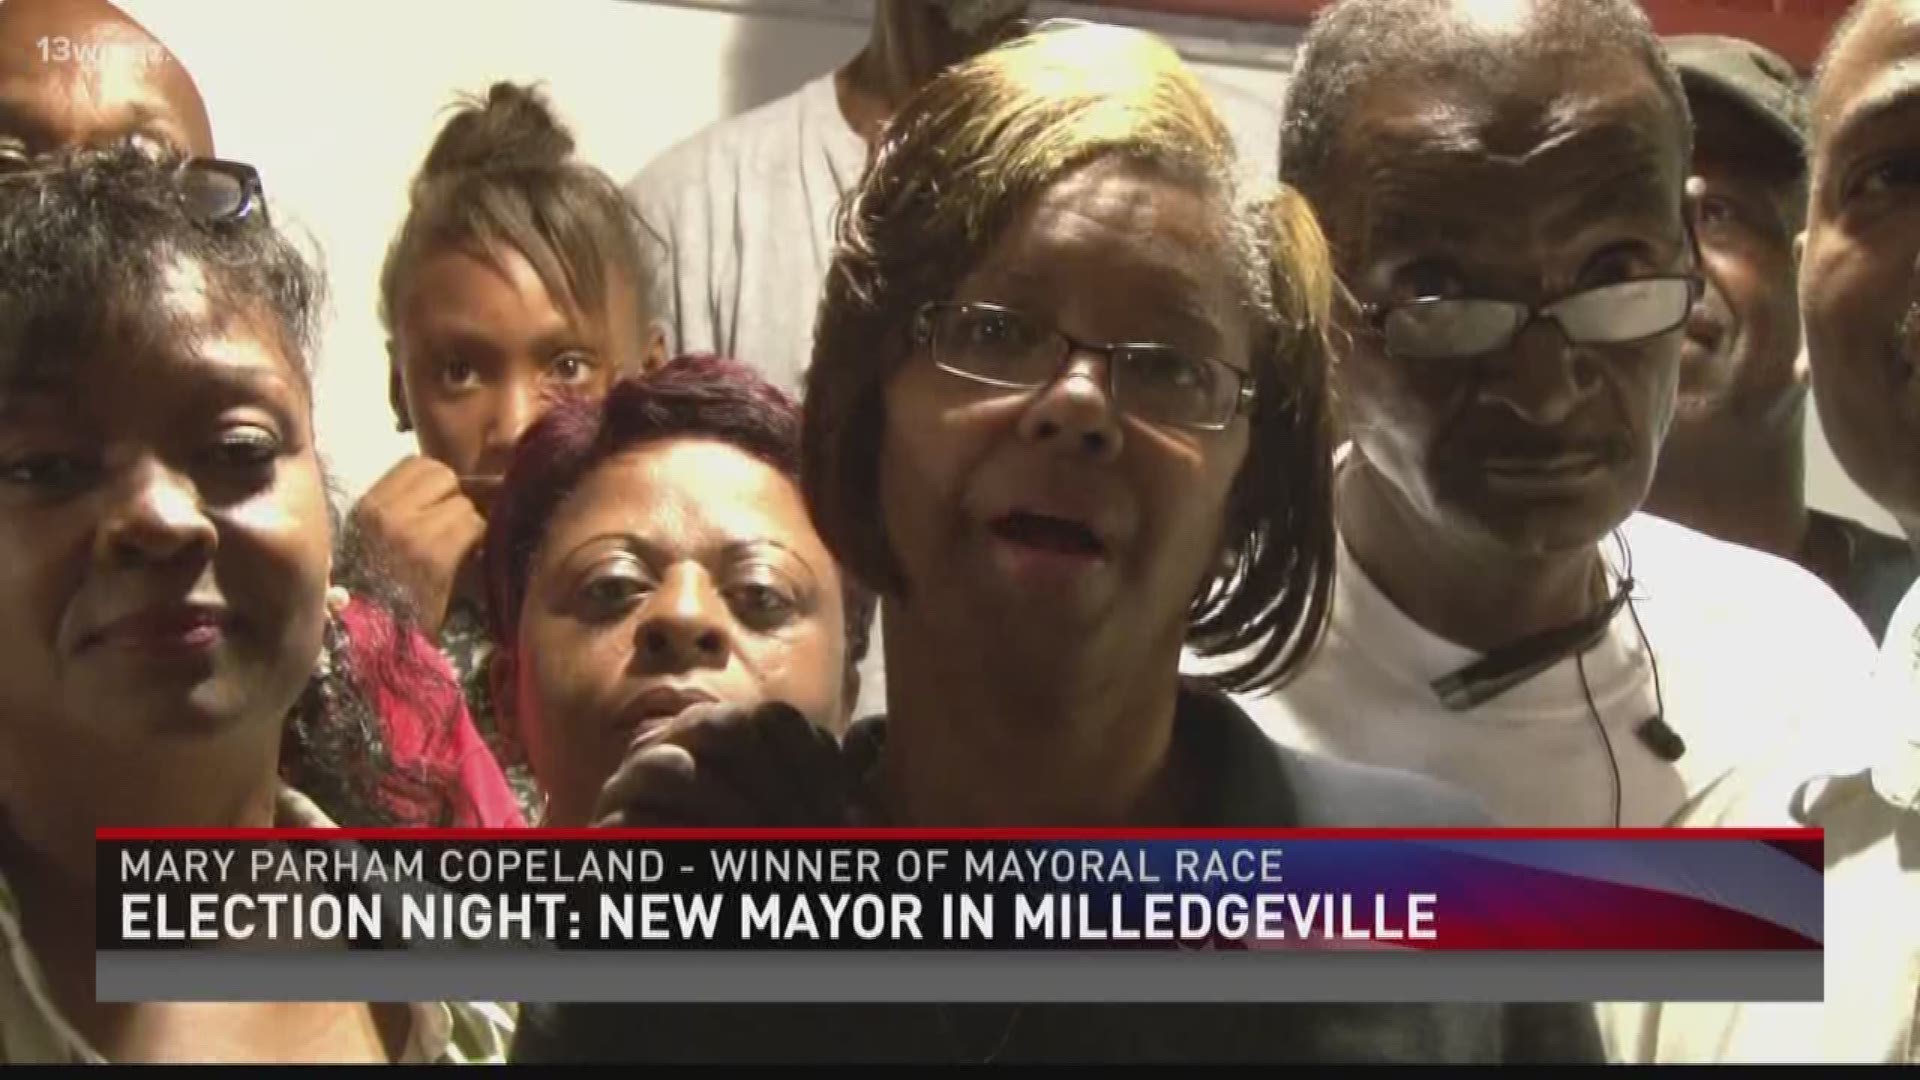 New mayor in Milledgeville